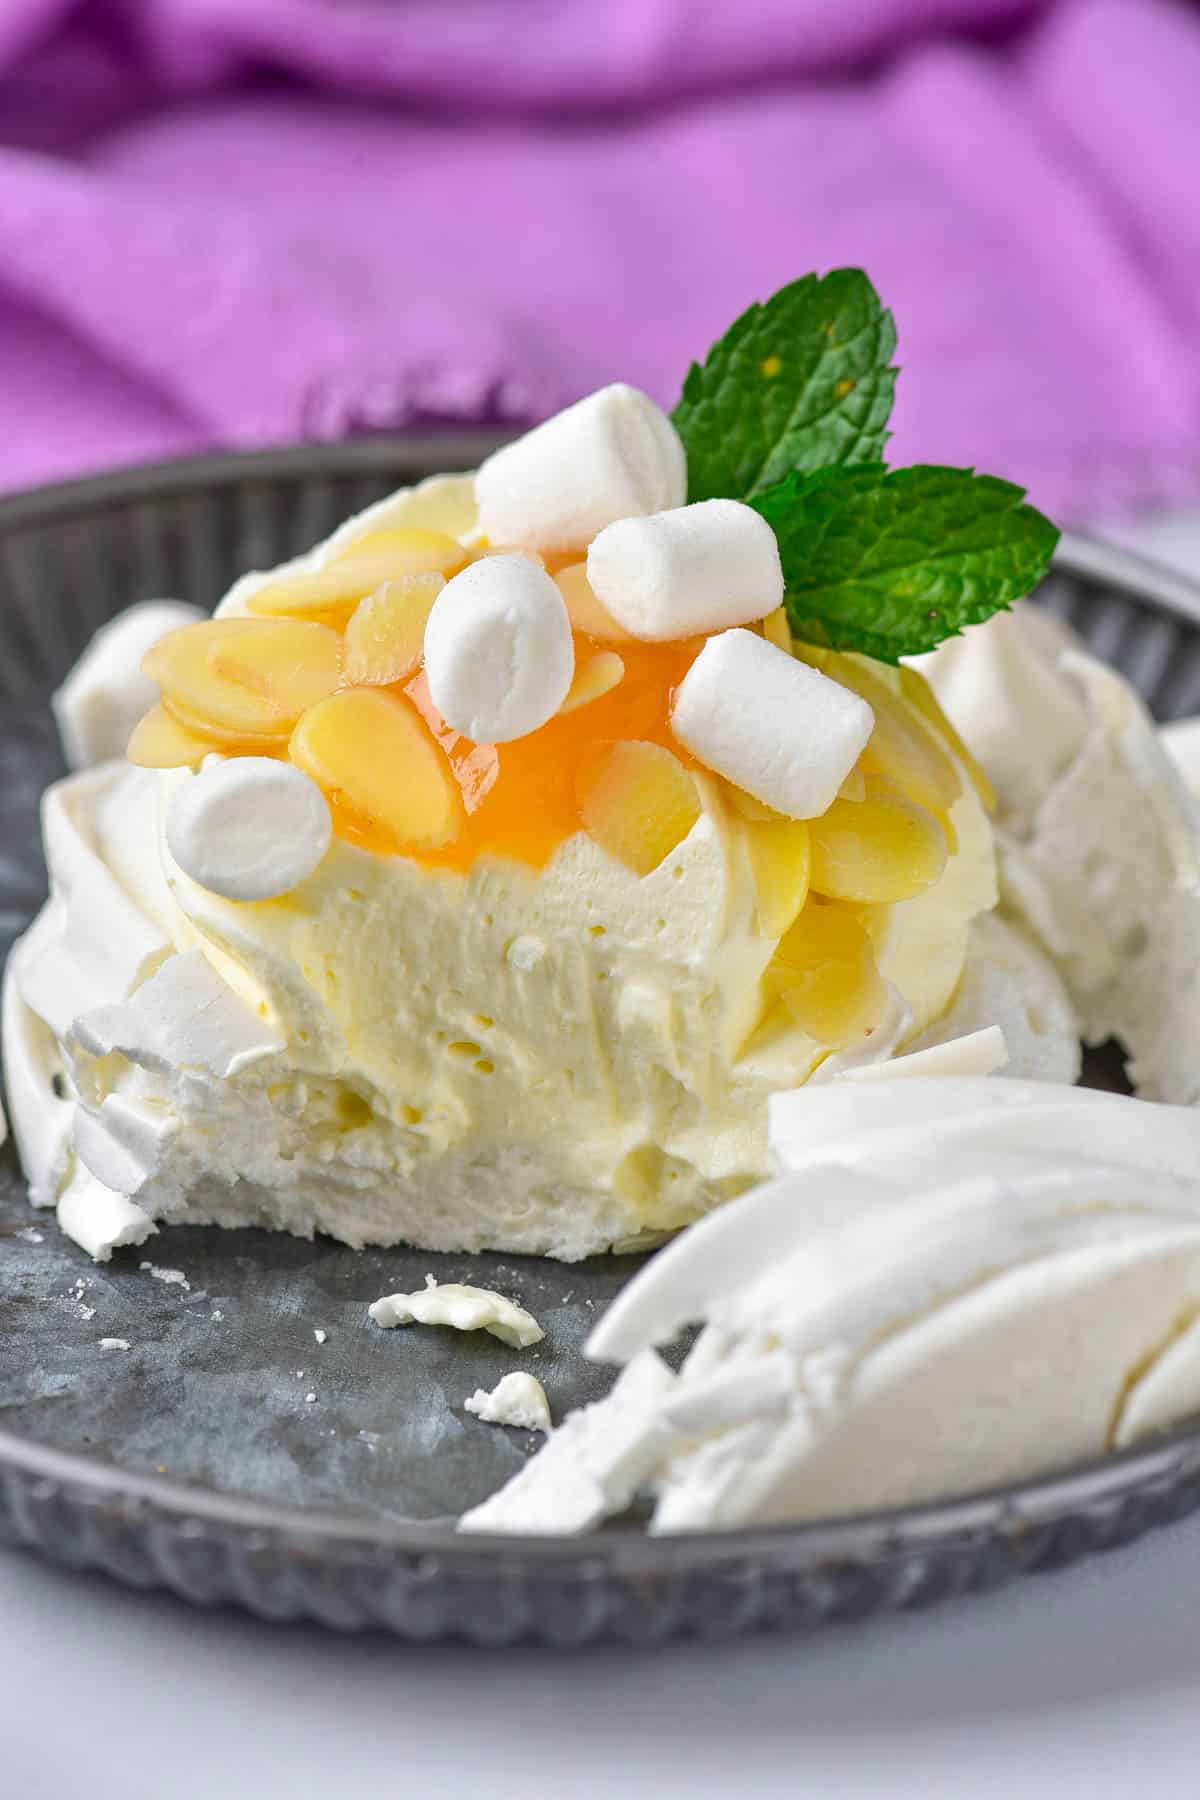 Pavlova dessert with almonds, lemon curd, marshmallow, and mint.